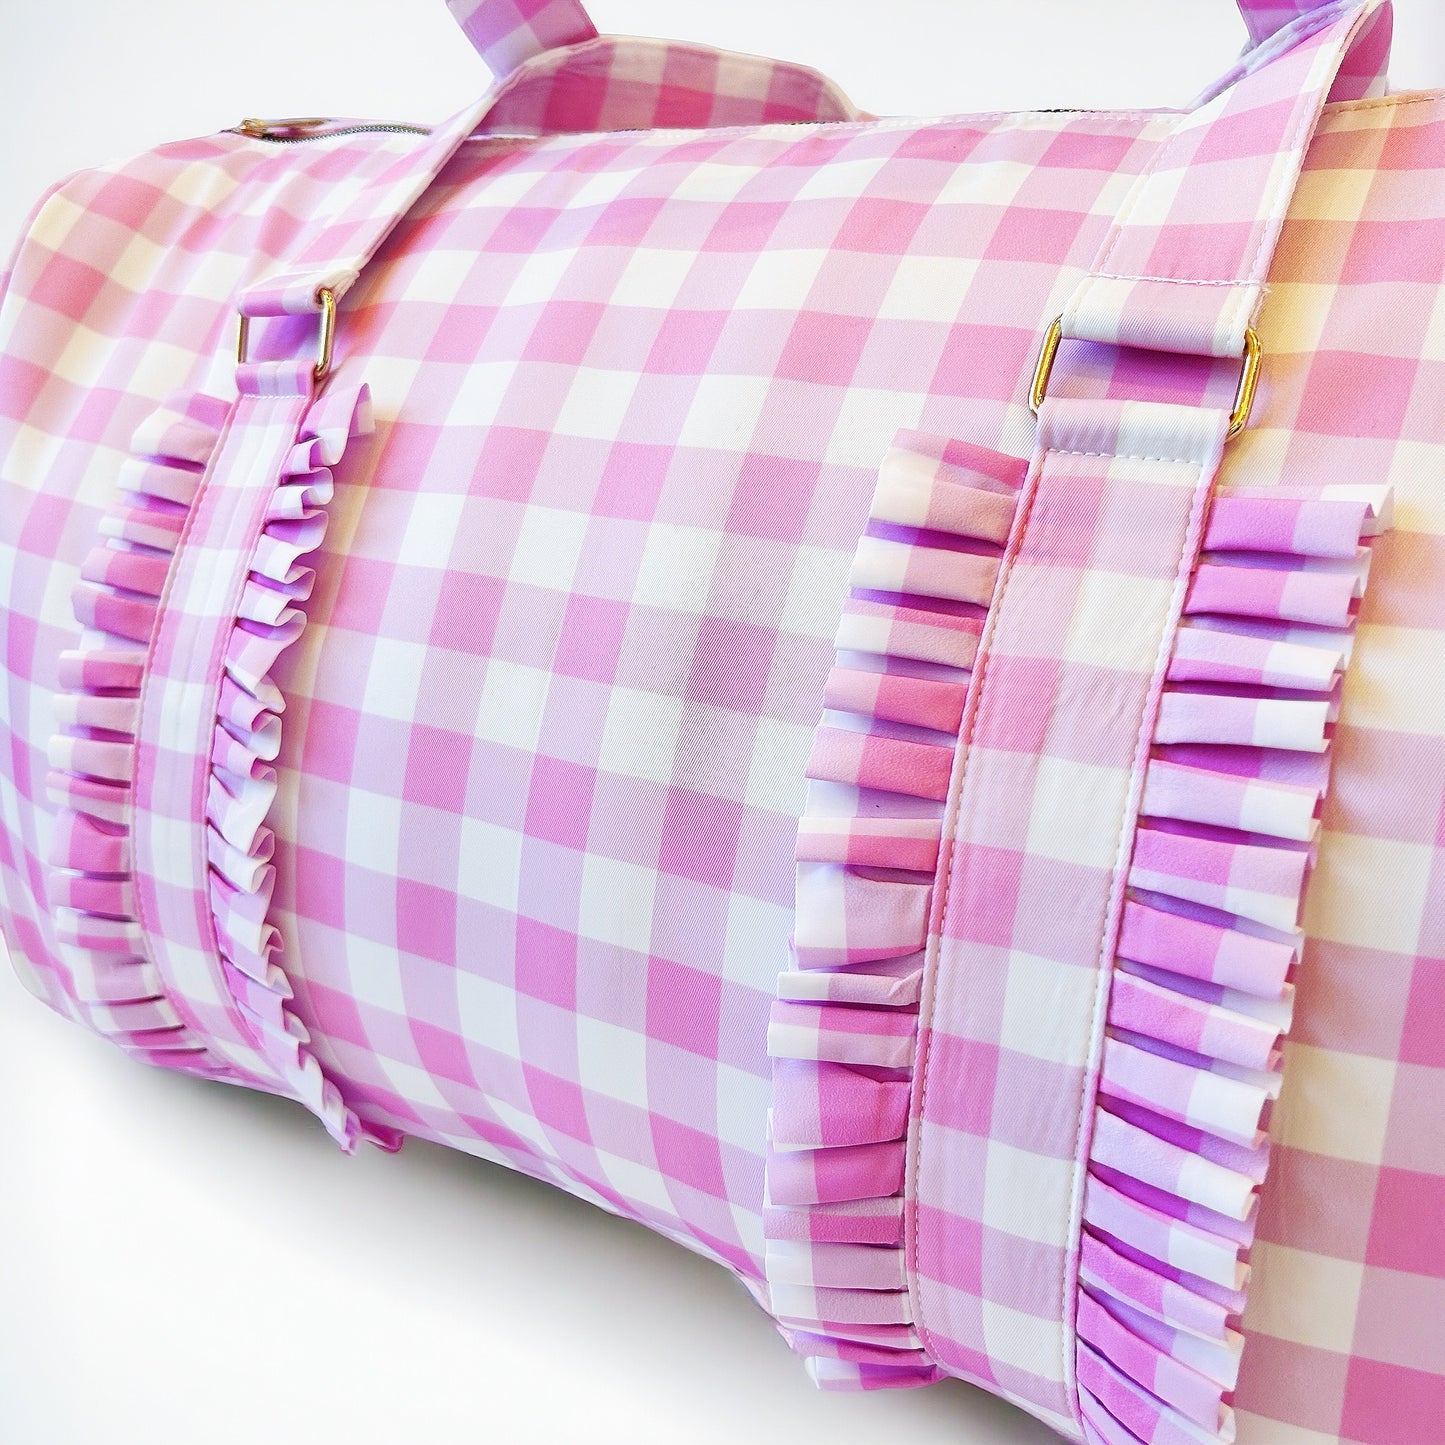 Pink Plaid Duffle Bag